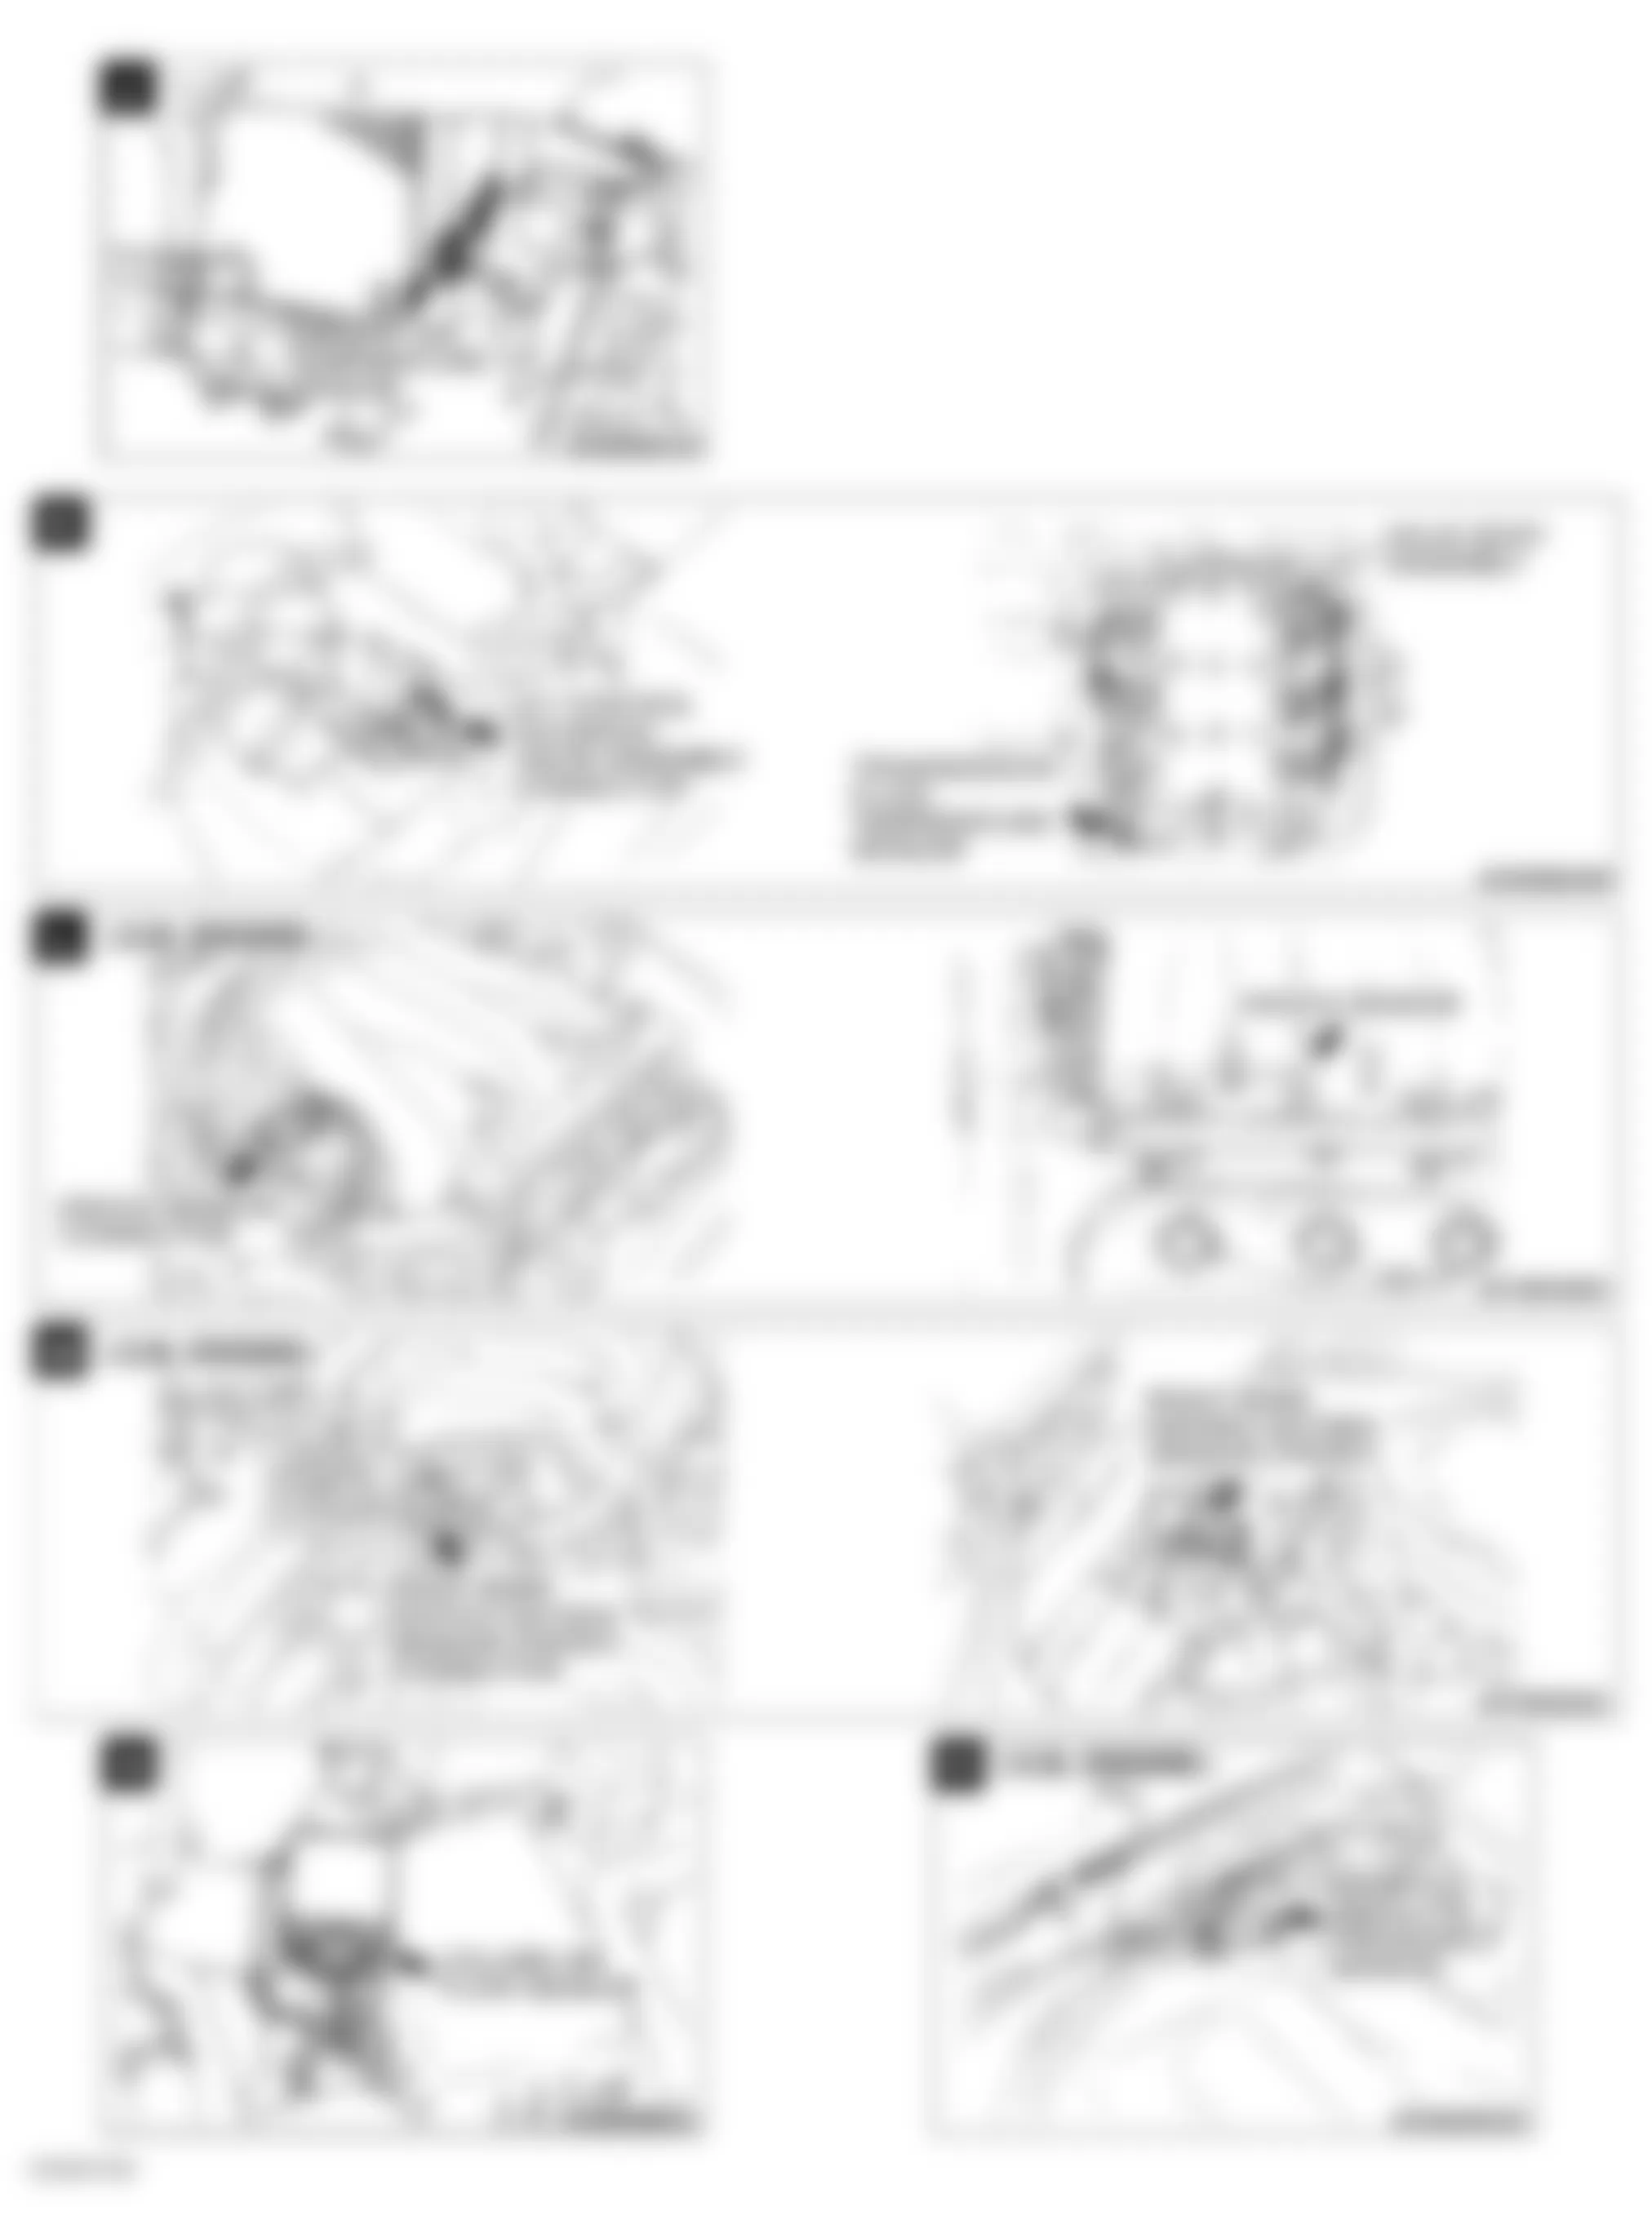 Dodge Stratus R/T 2004 - Component Locations -  Sensor Views (3 Of 6)